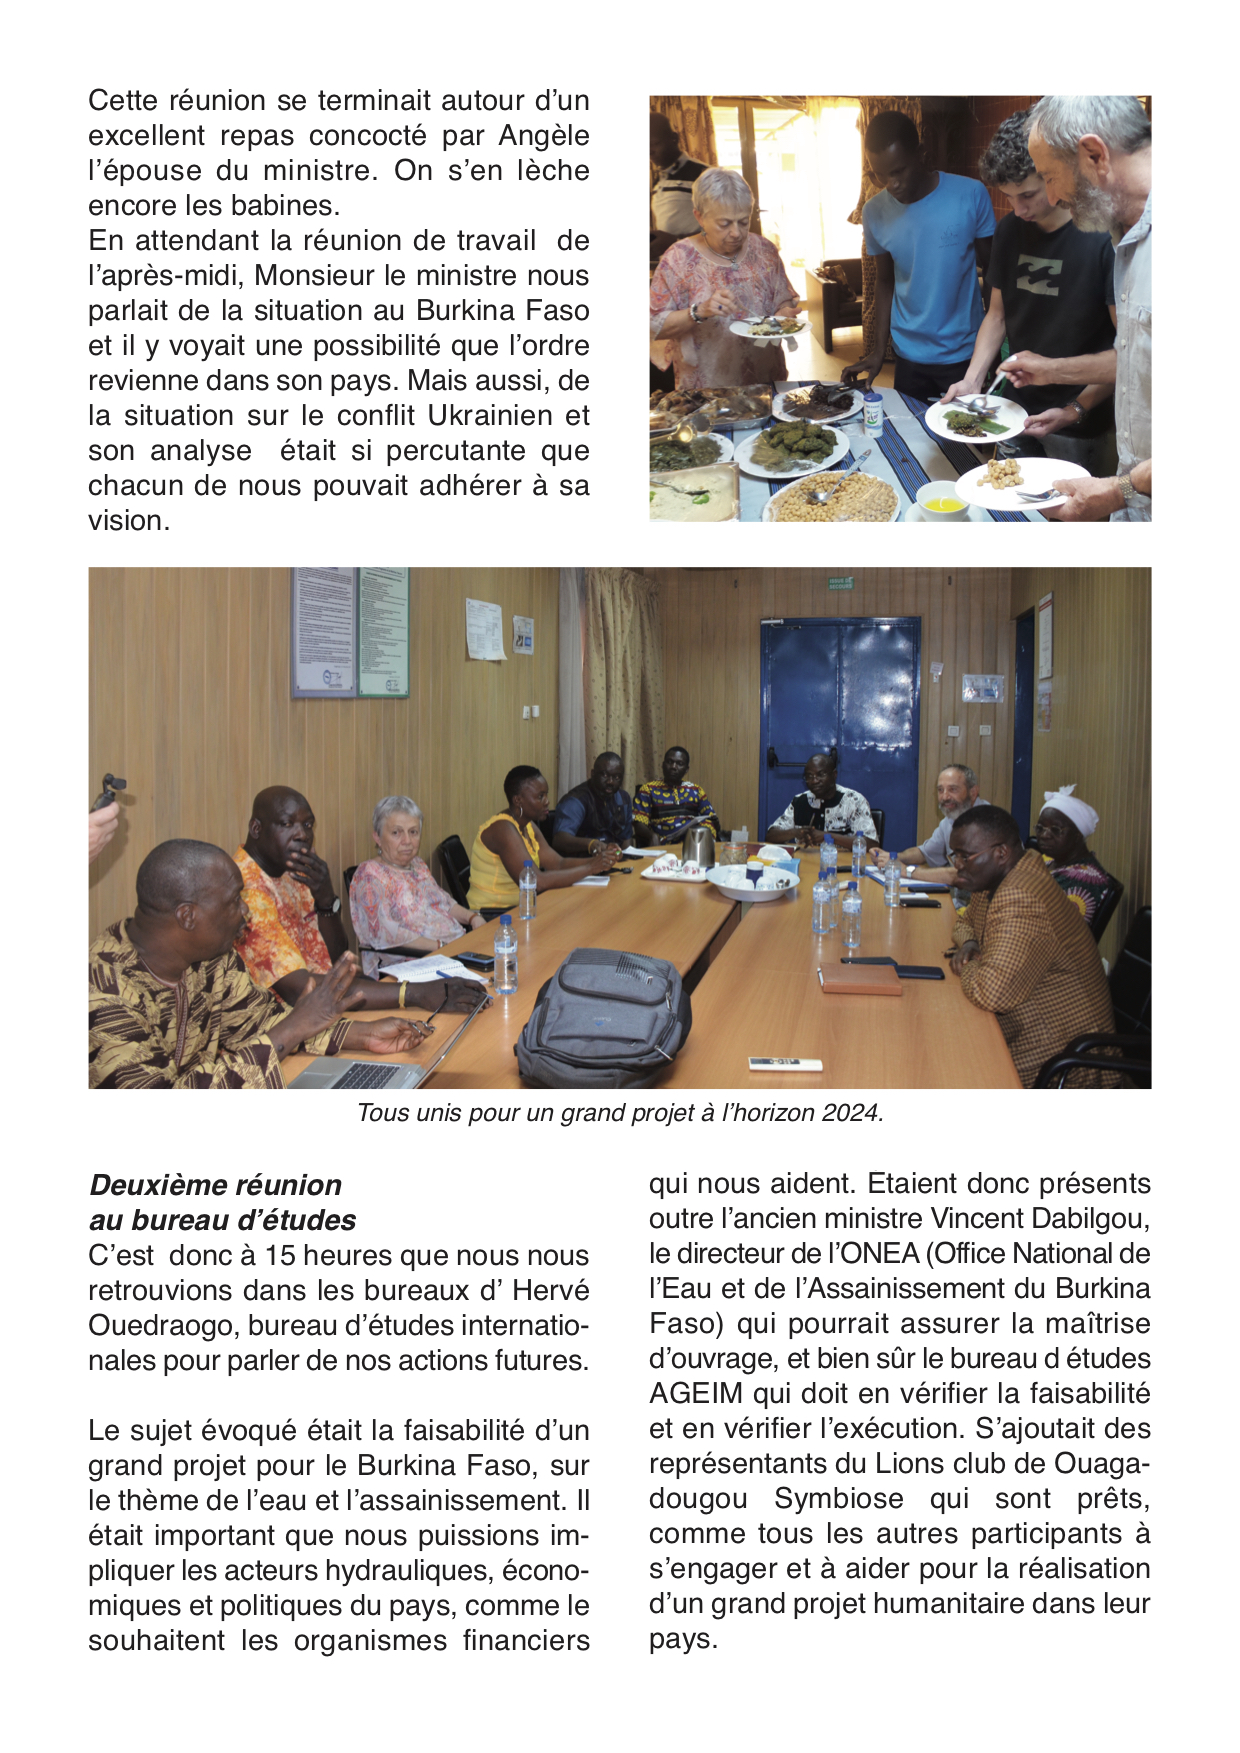 Journal de voyage au Burkina Faso - Mardi 1er au jeudi 3 mars 2022 - page 3